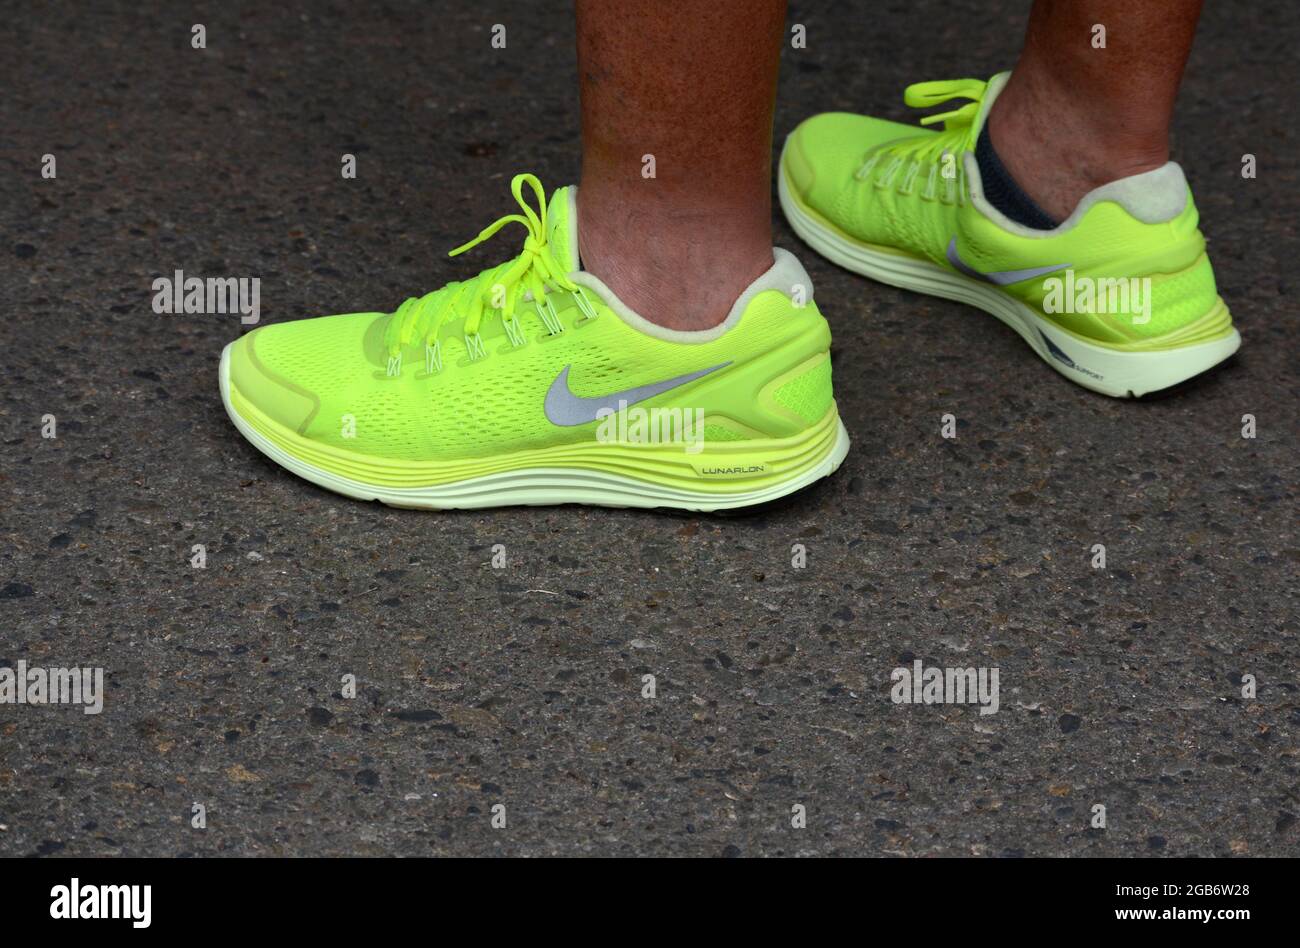 Nike laufschuhe -Fotos und -Bildmaterial in hoher Auflösung – Alamy